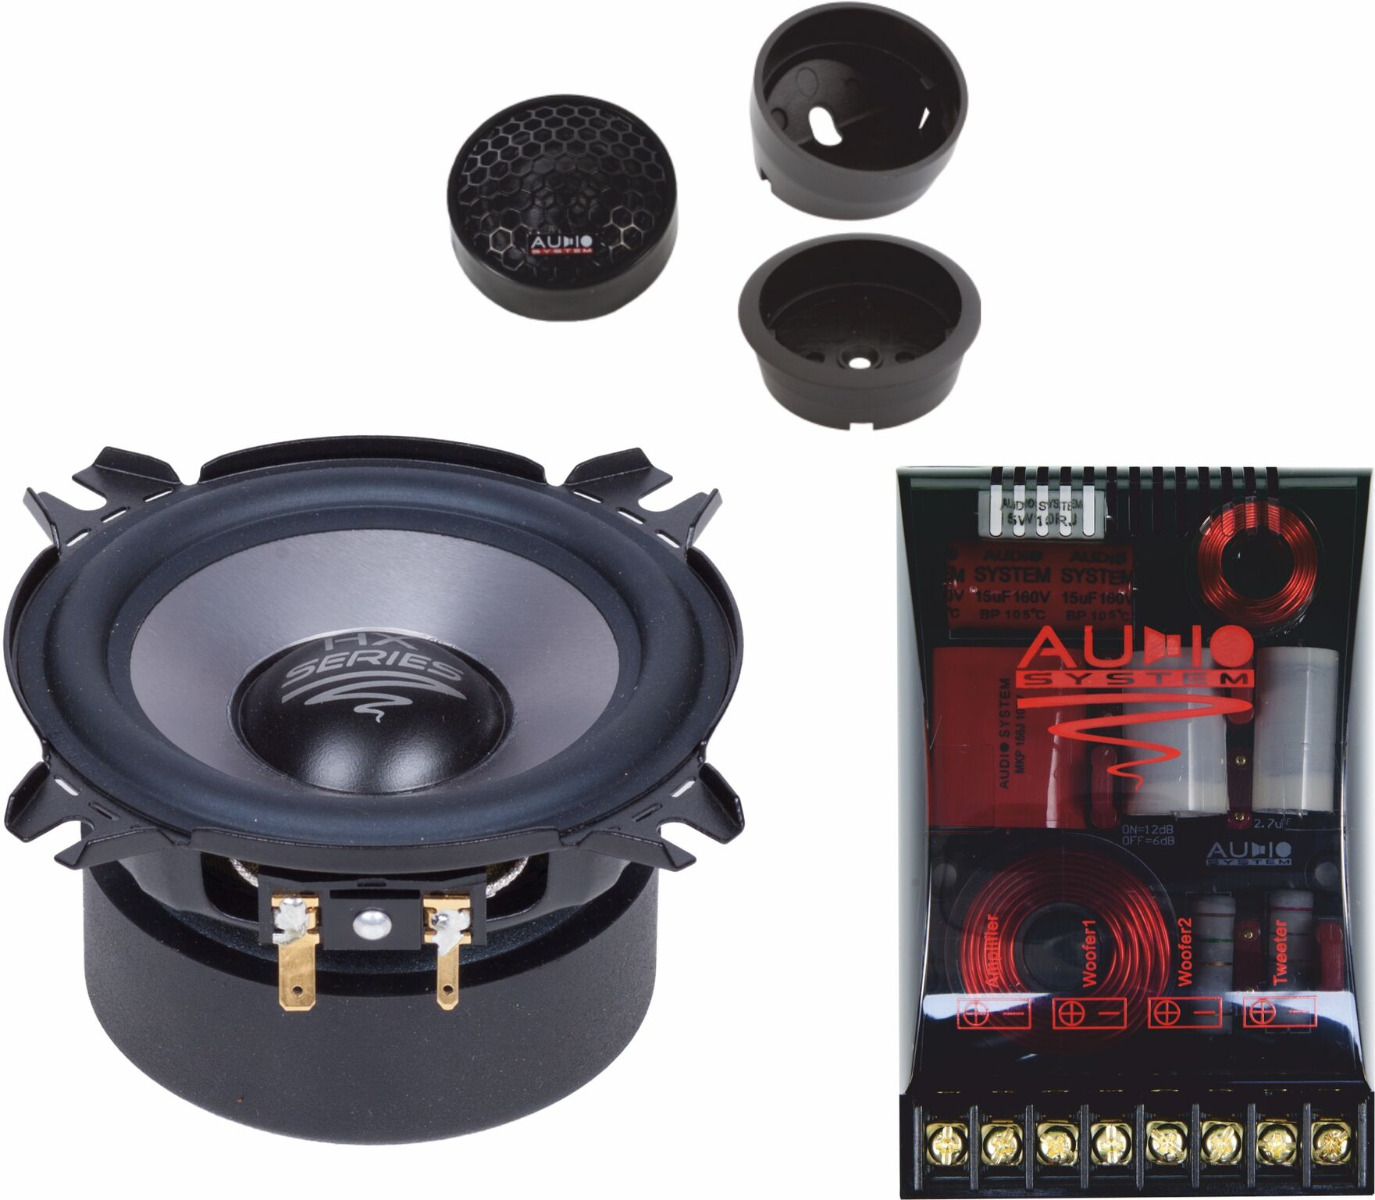 Audio System HX 100 SQ EVO 2 HX-SERIES SQ 10cm 2-Wege HIGH END System